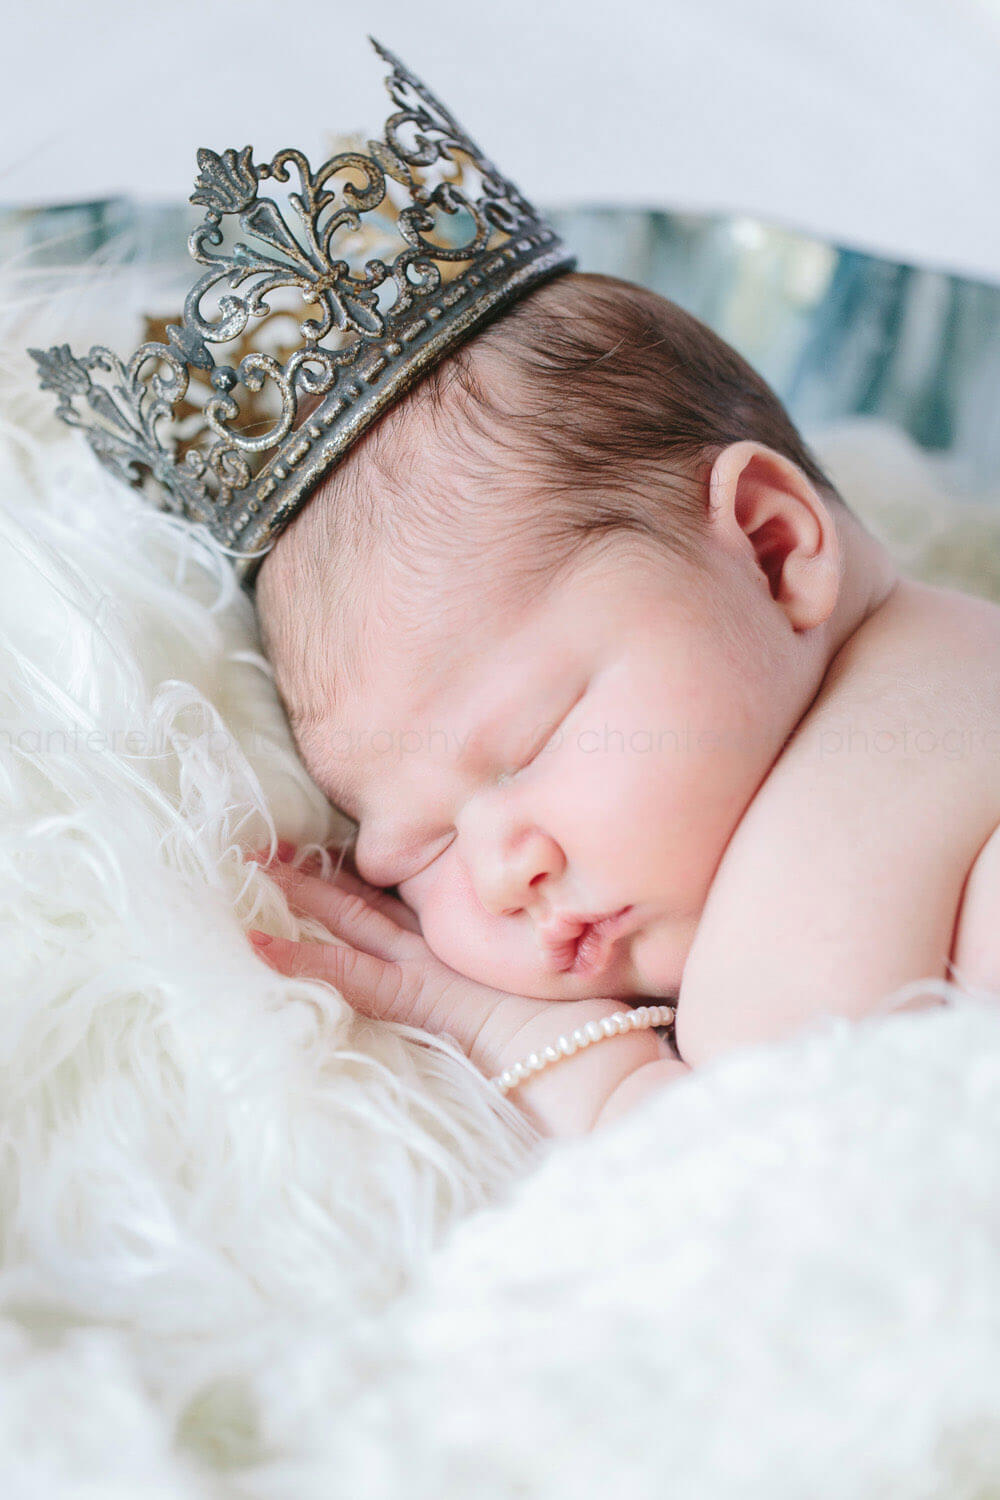 newborn sleeping wearing crown